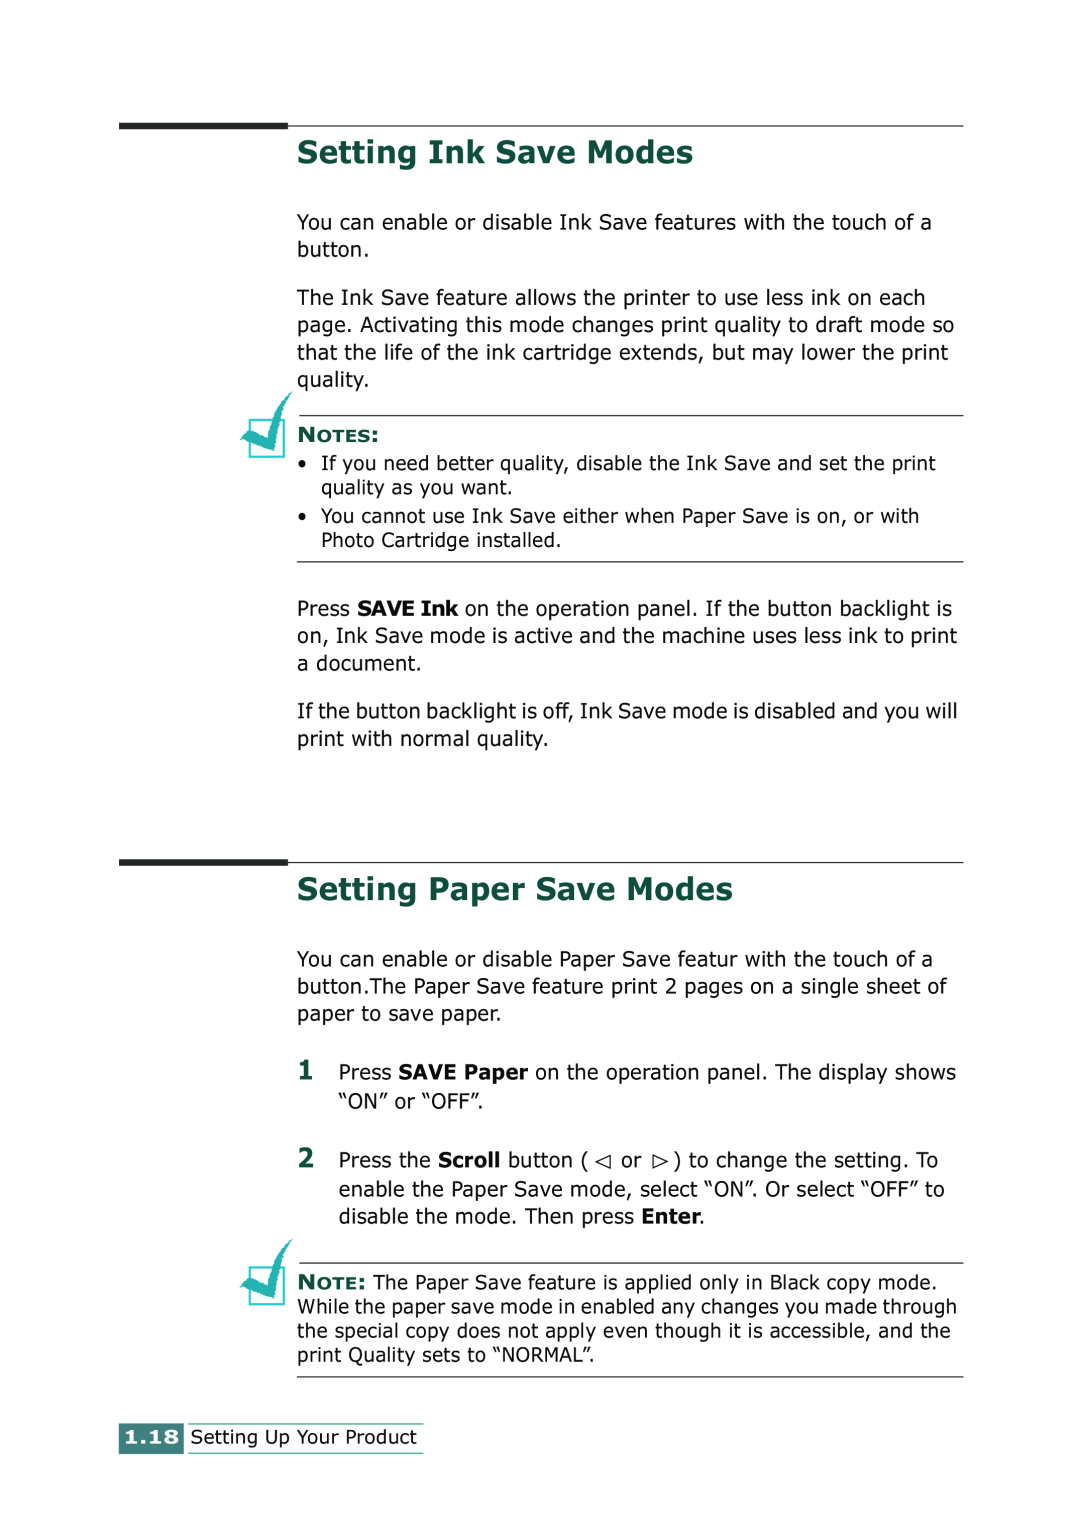 Samsung SCX-1100 manual Setting Ink Save Modes, Setting Paper Save Modes, Setting Up Your Product 